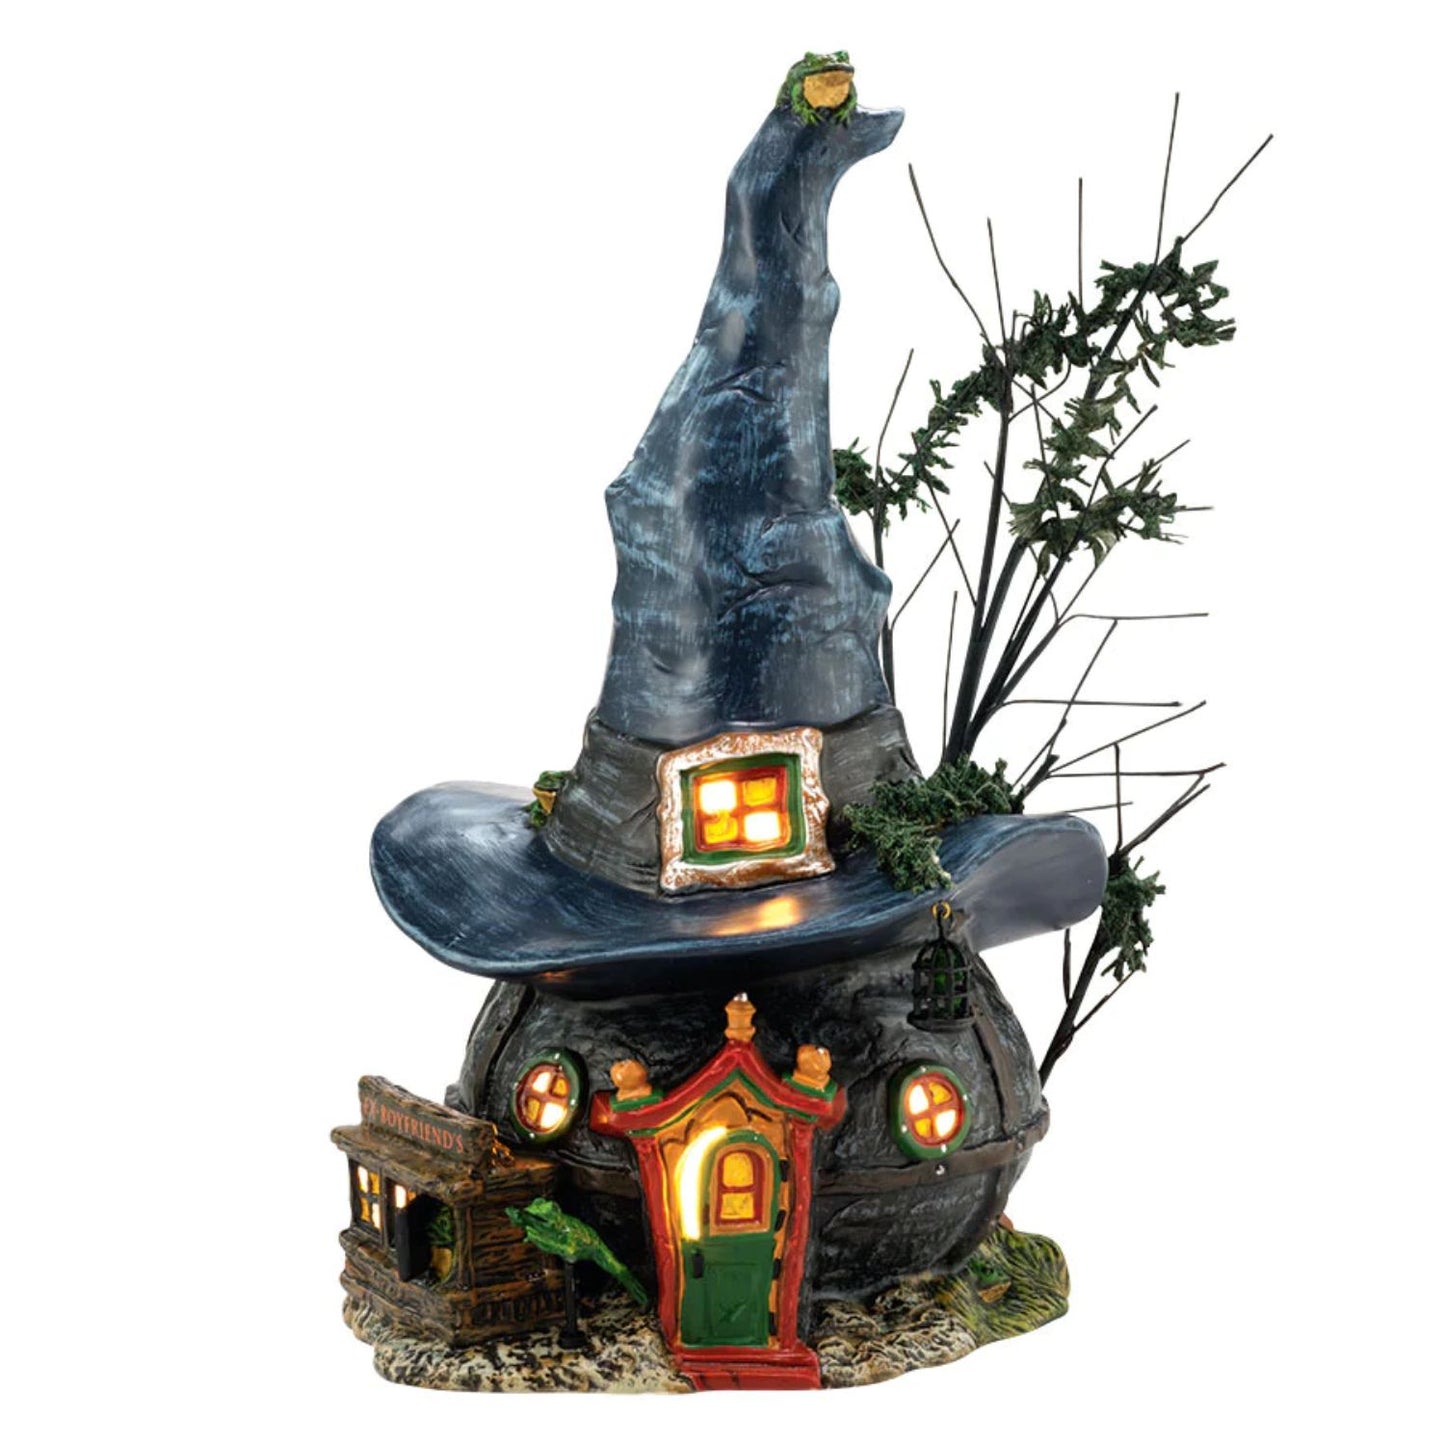 Dept56 Toads & Frogs Witchcraft Haunt Snow Village Halloween Ornament 6"